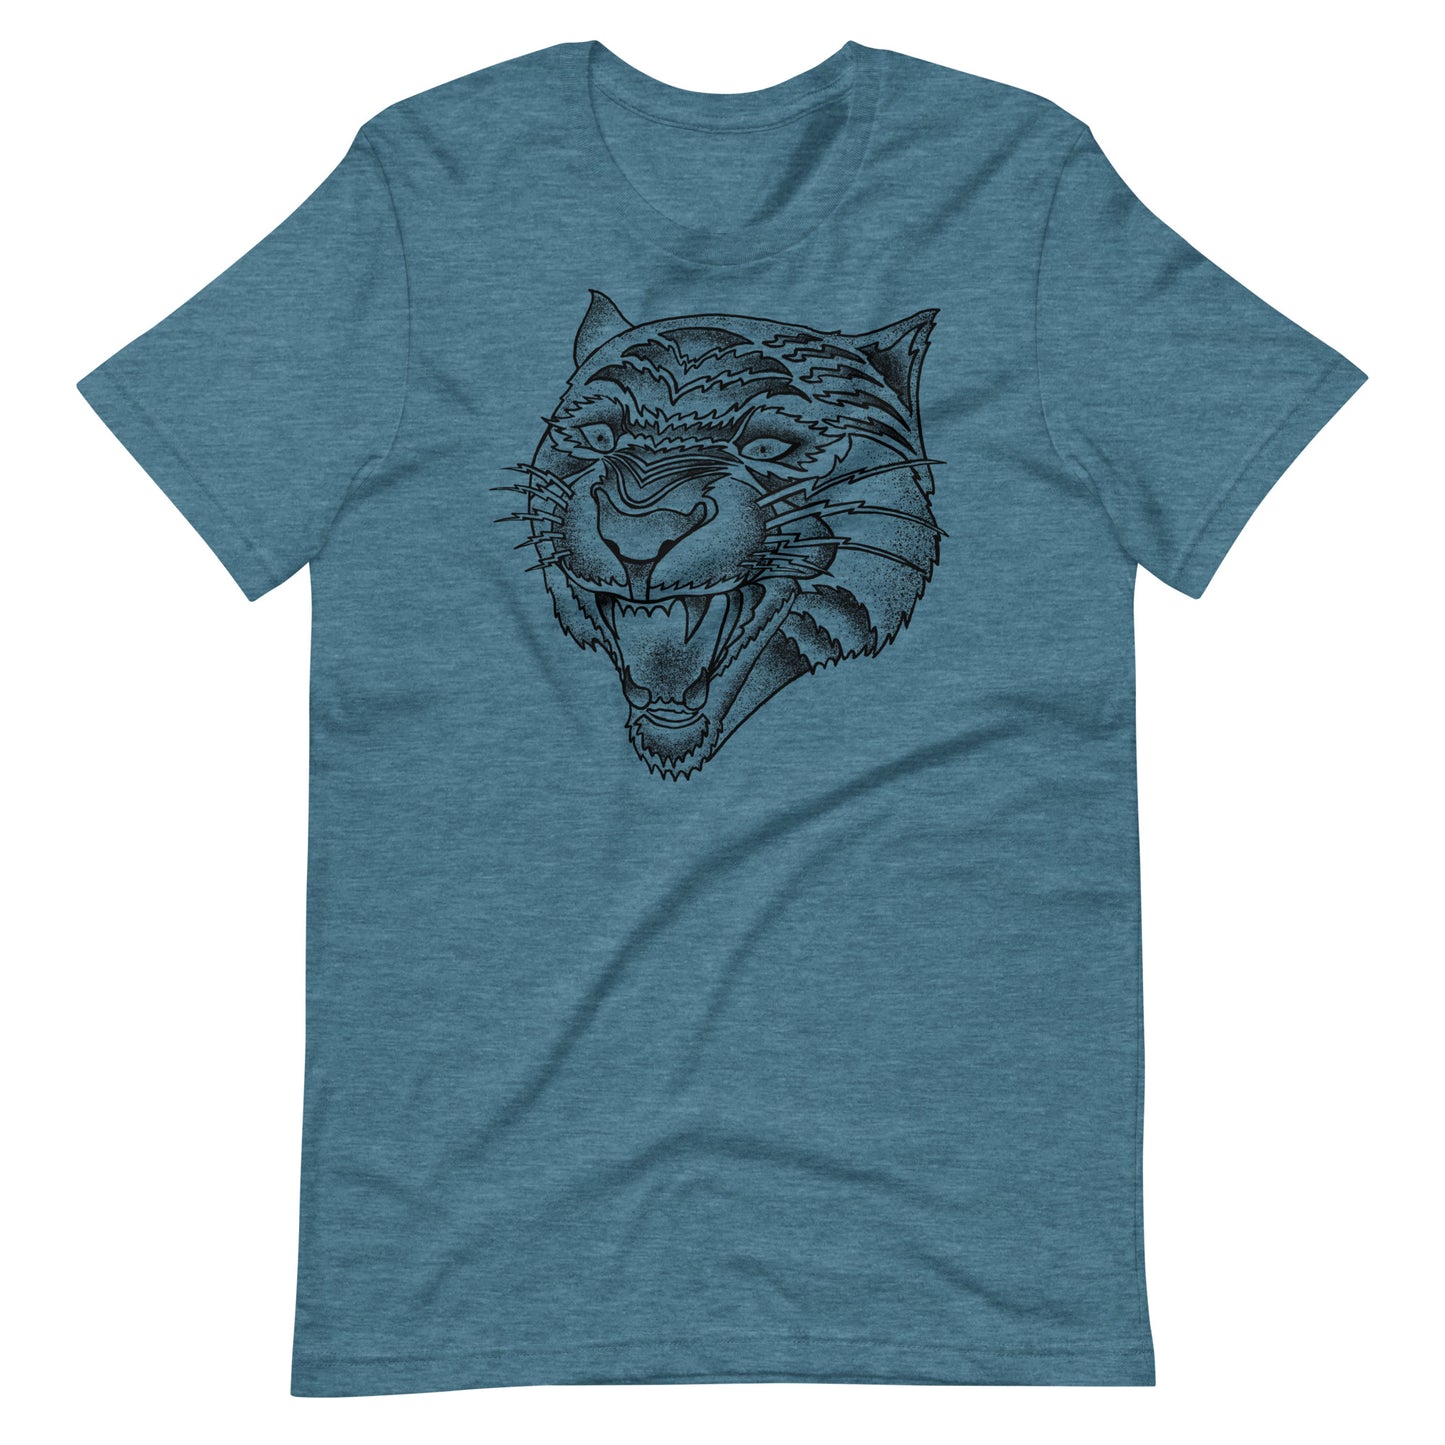 Panther Black - Men's t-shirt - Heather Deep Teal Front